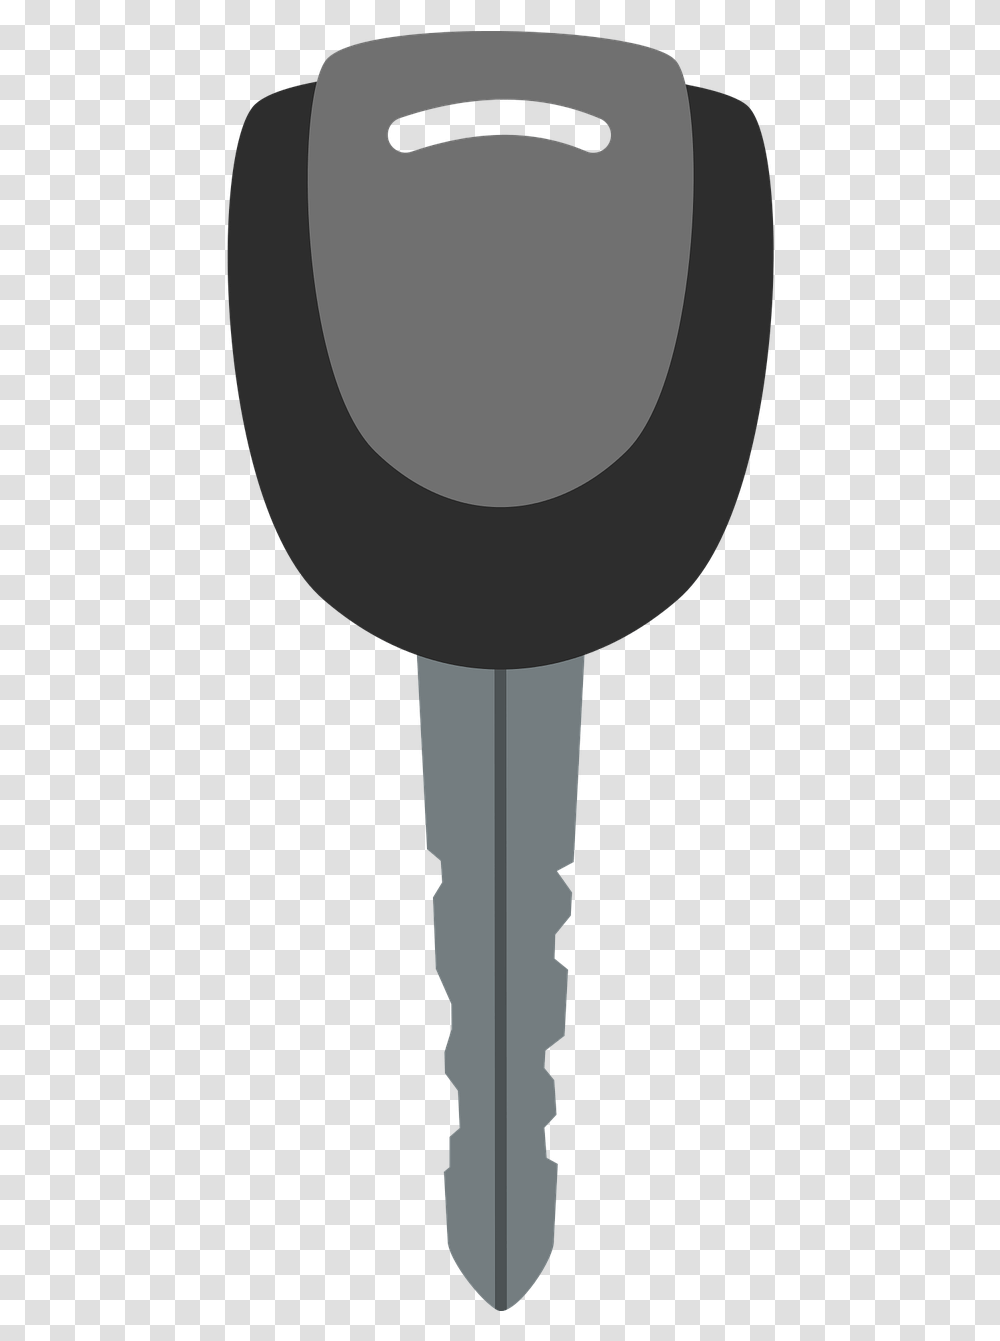 Bicycle Lock Key Car Image Car Key Clipart, Glass, Lamp, Goblet, Tool Transparent Png